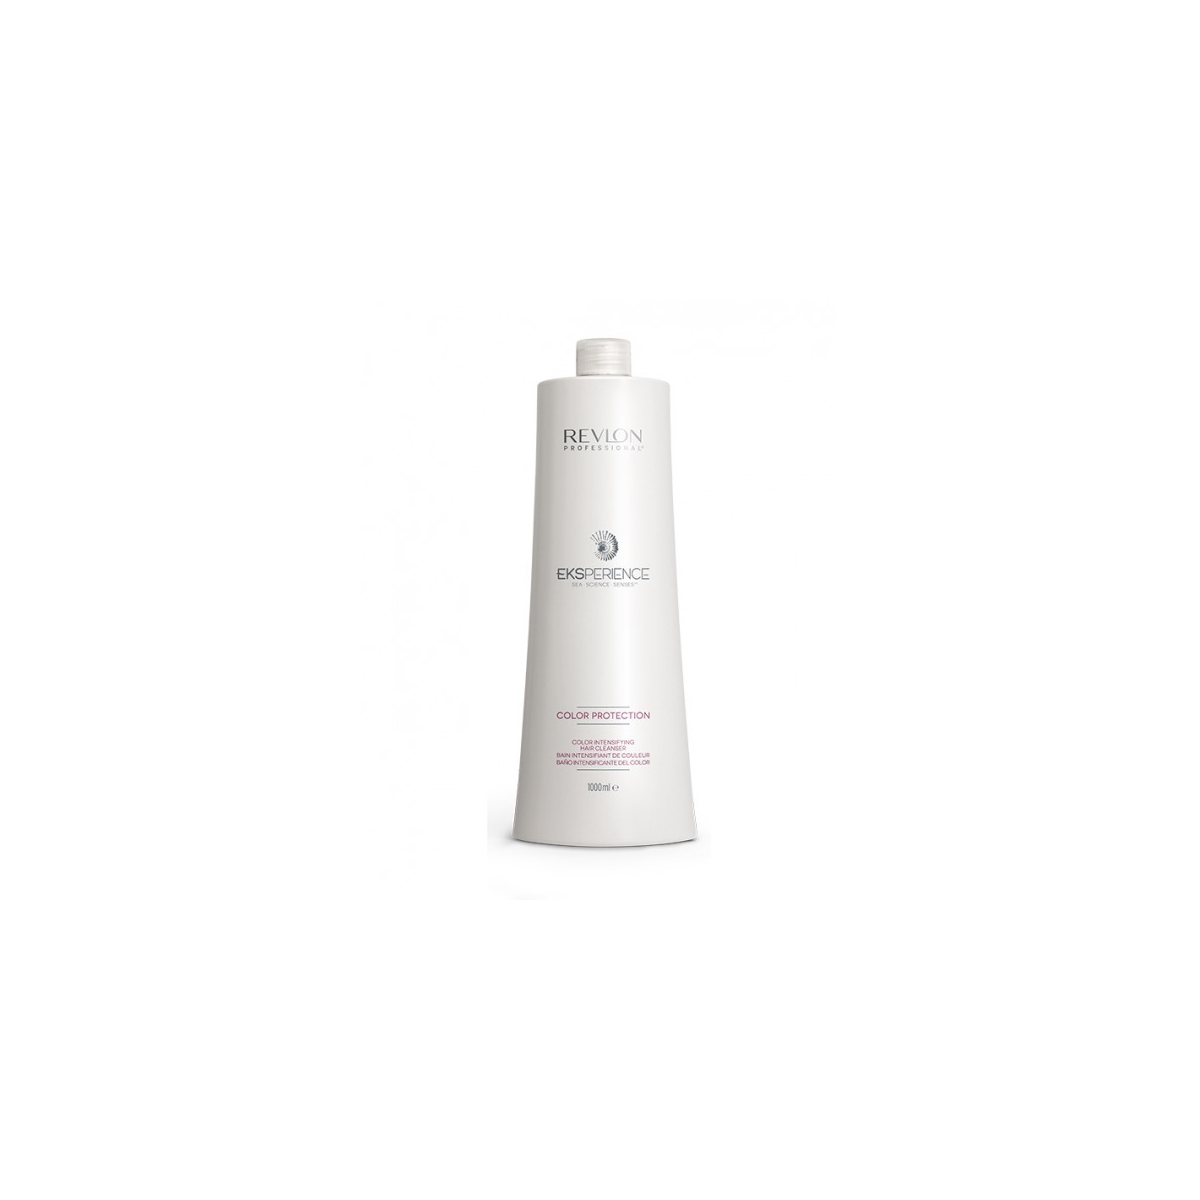 REVLON - EKSPERIENCE - COLOR PROTECTION SHAMPOO (1000ml) Shampoo Intensificante Colore